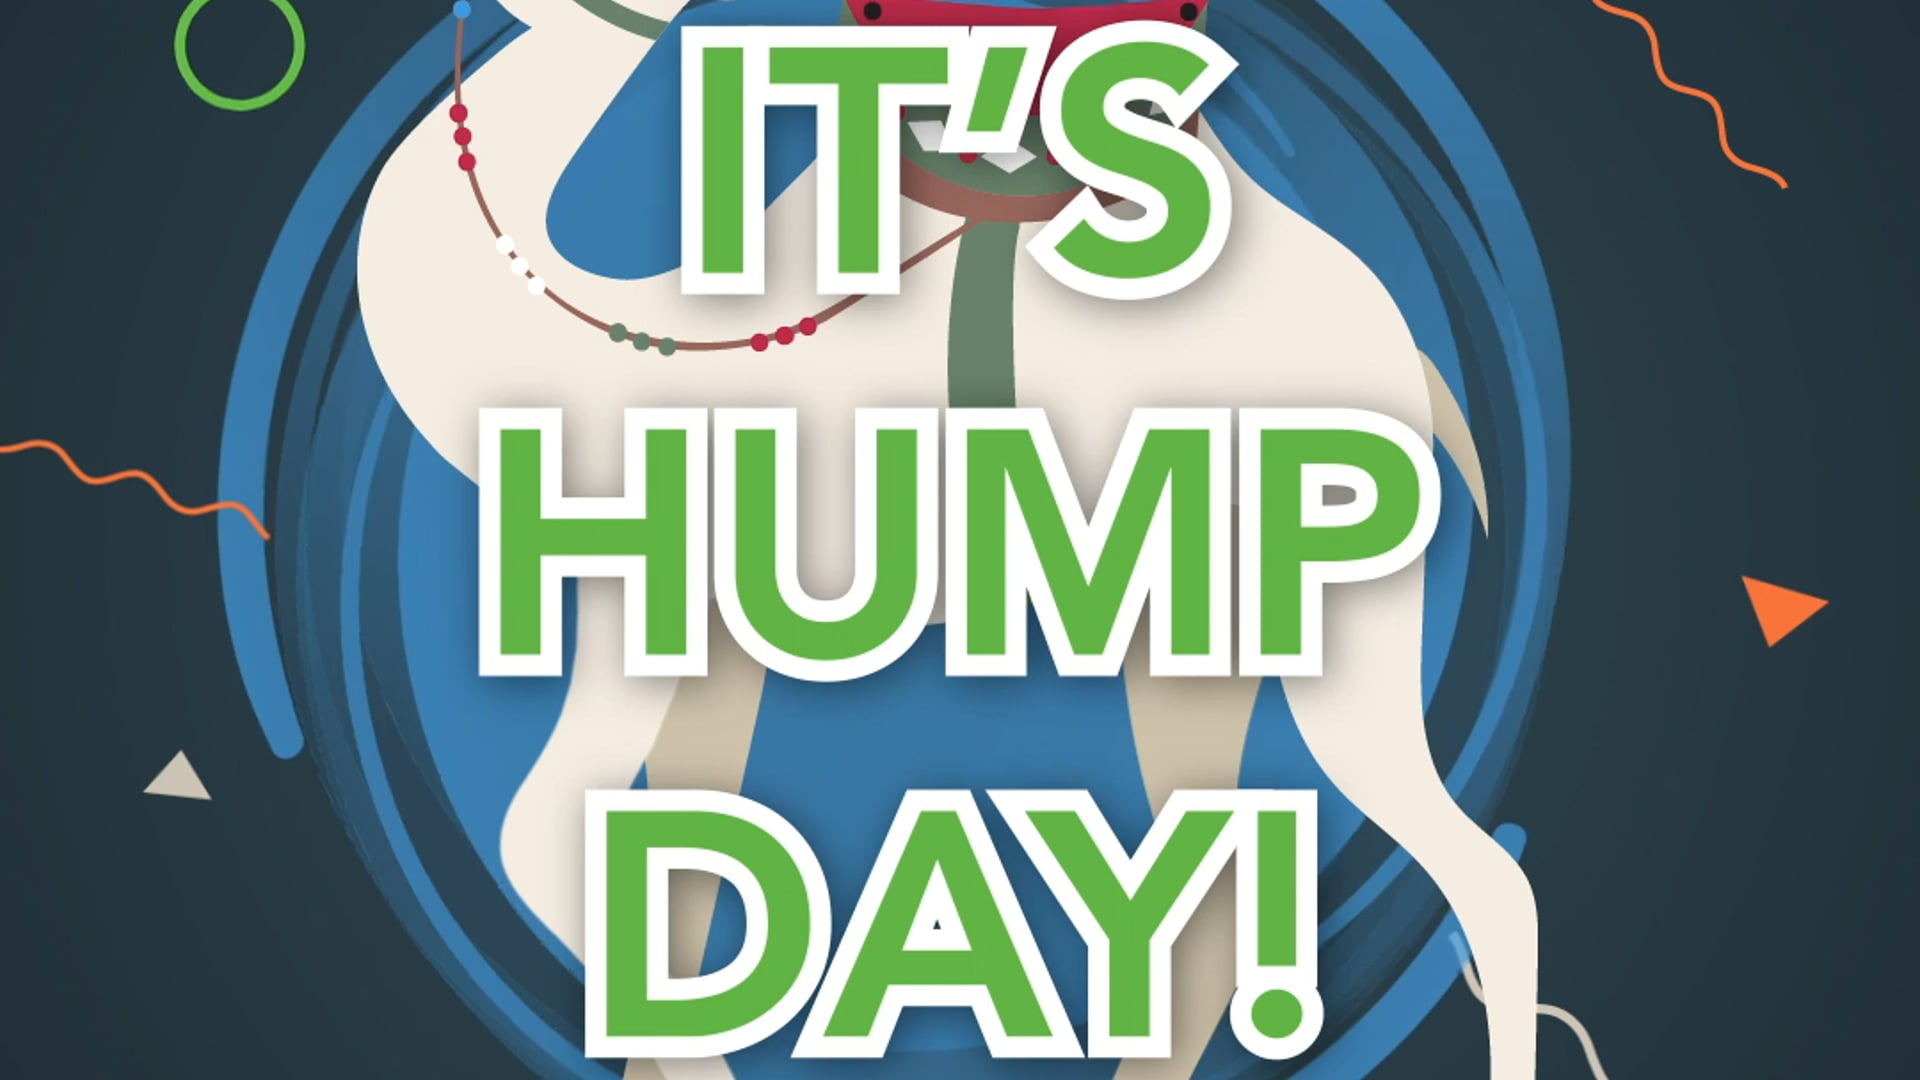 Hump Day - Social Media Animation